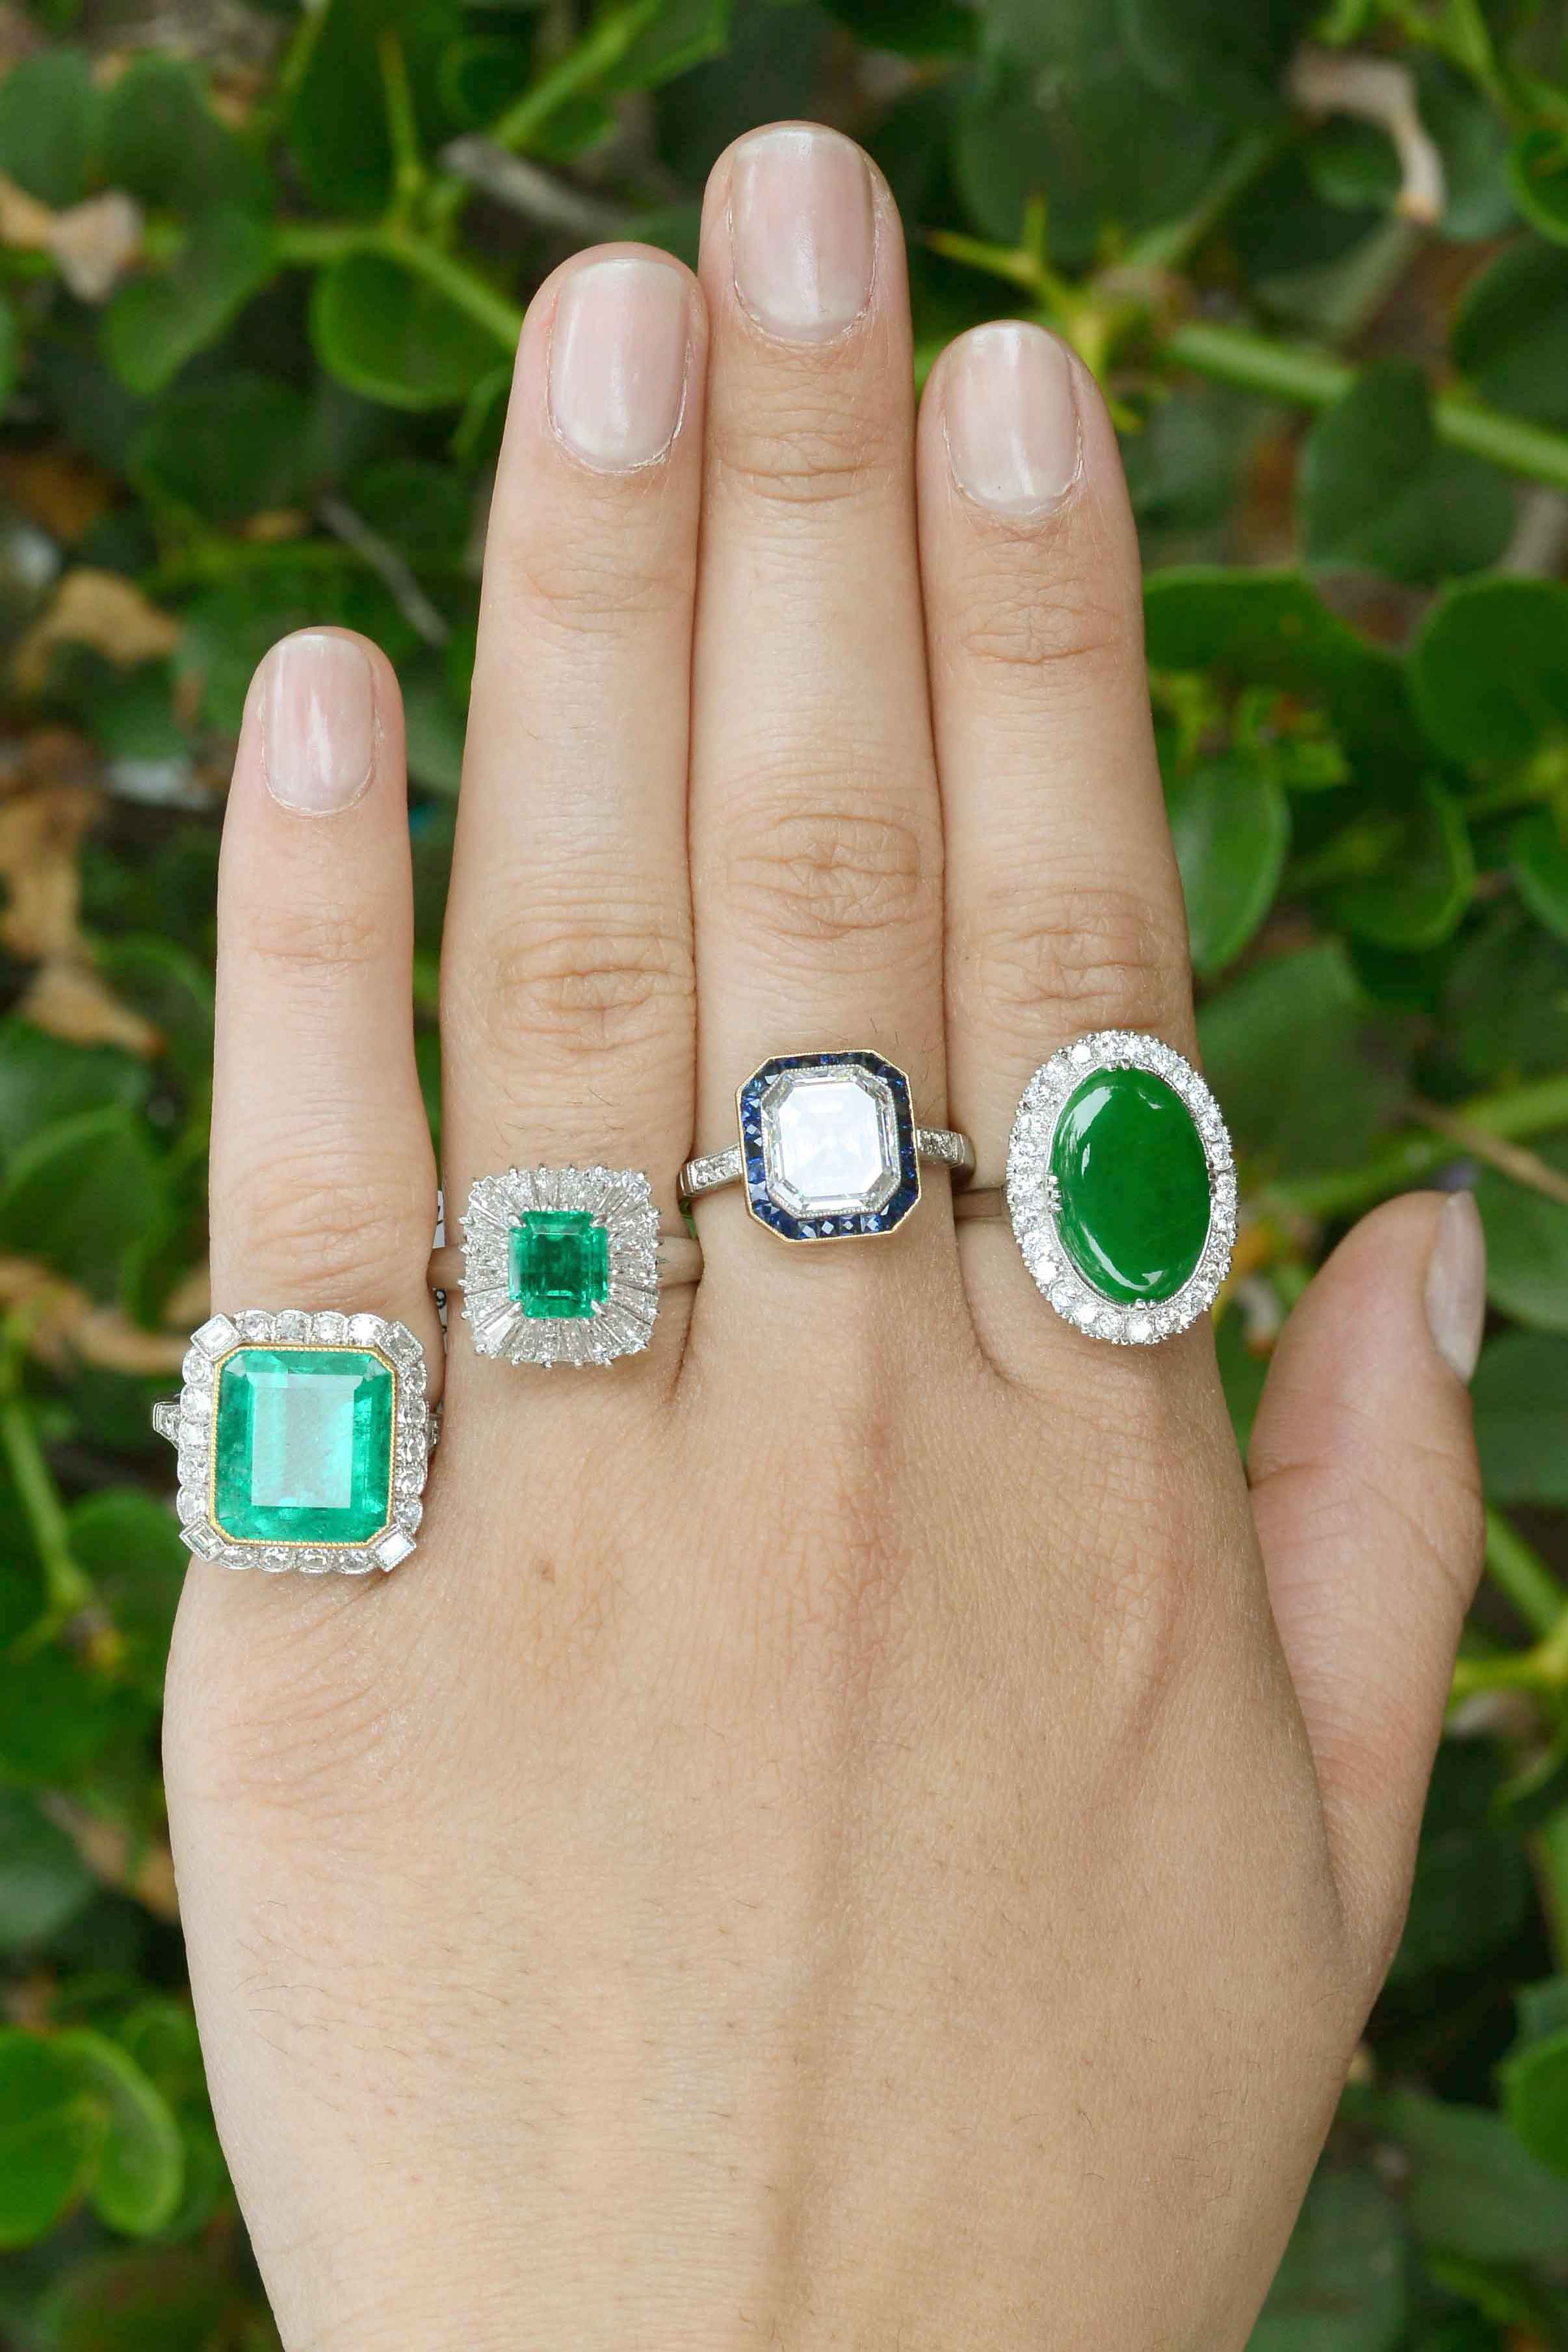 Buskruit bestellen zoals dat Mid Century Natural Emerald Diamond Square Halo Cocktail Ring